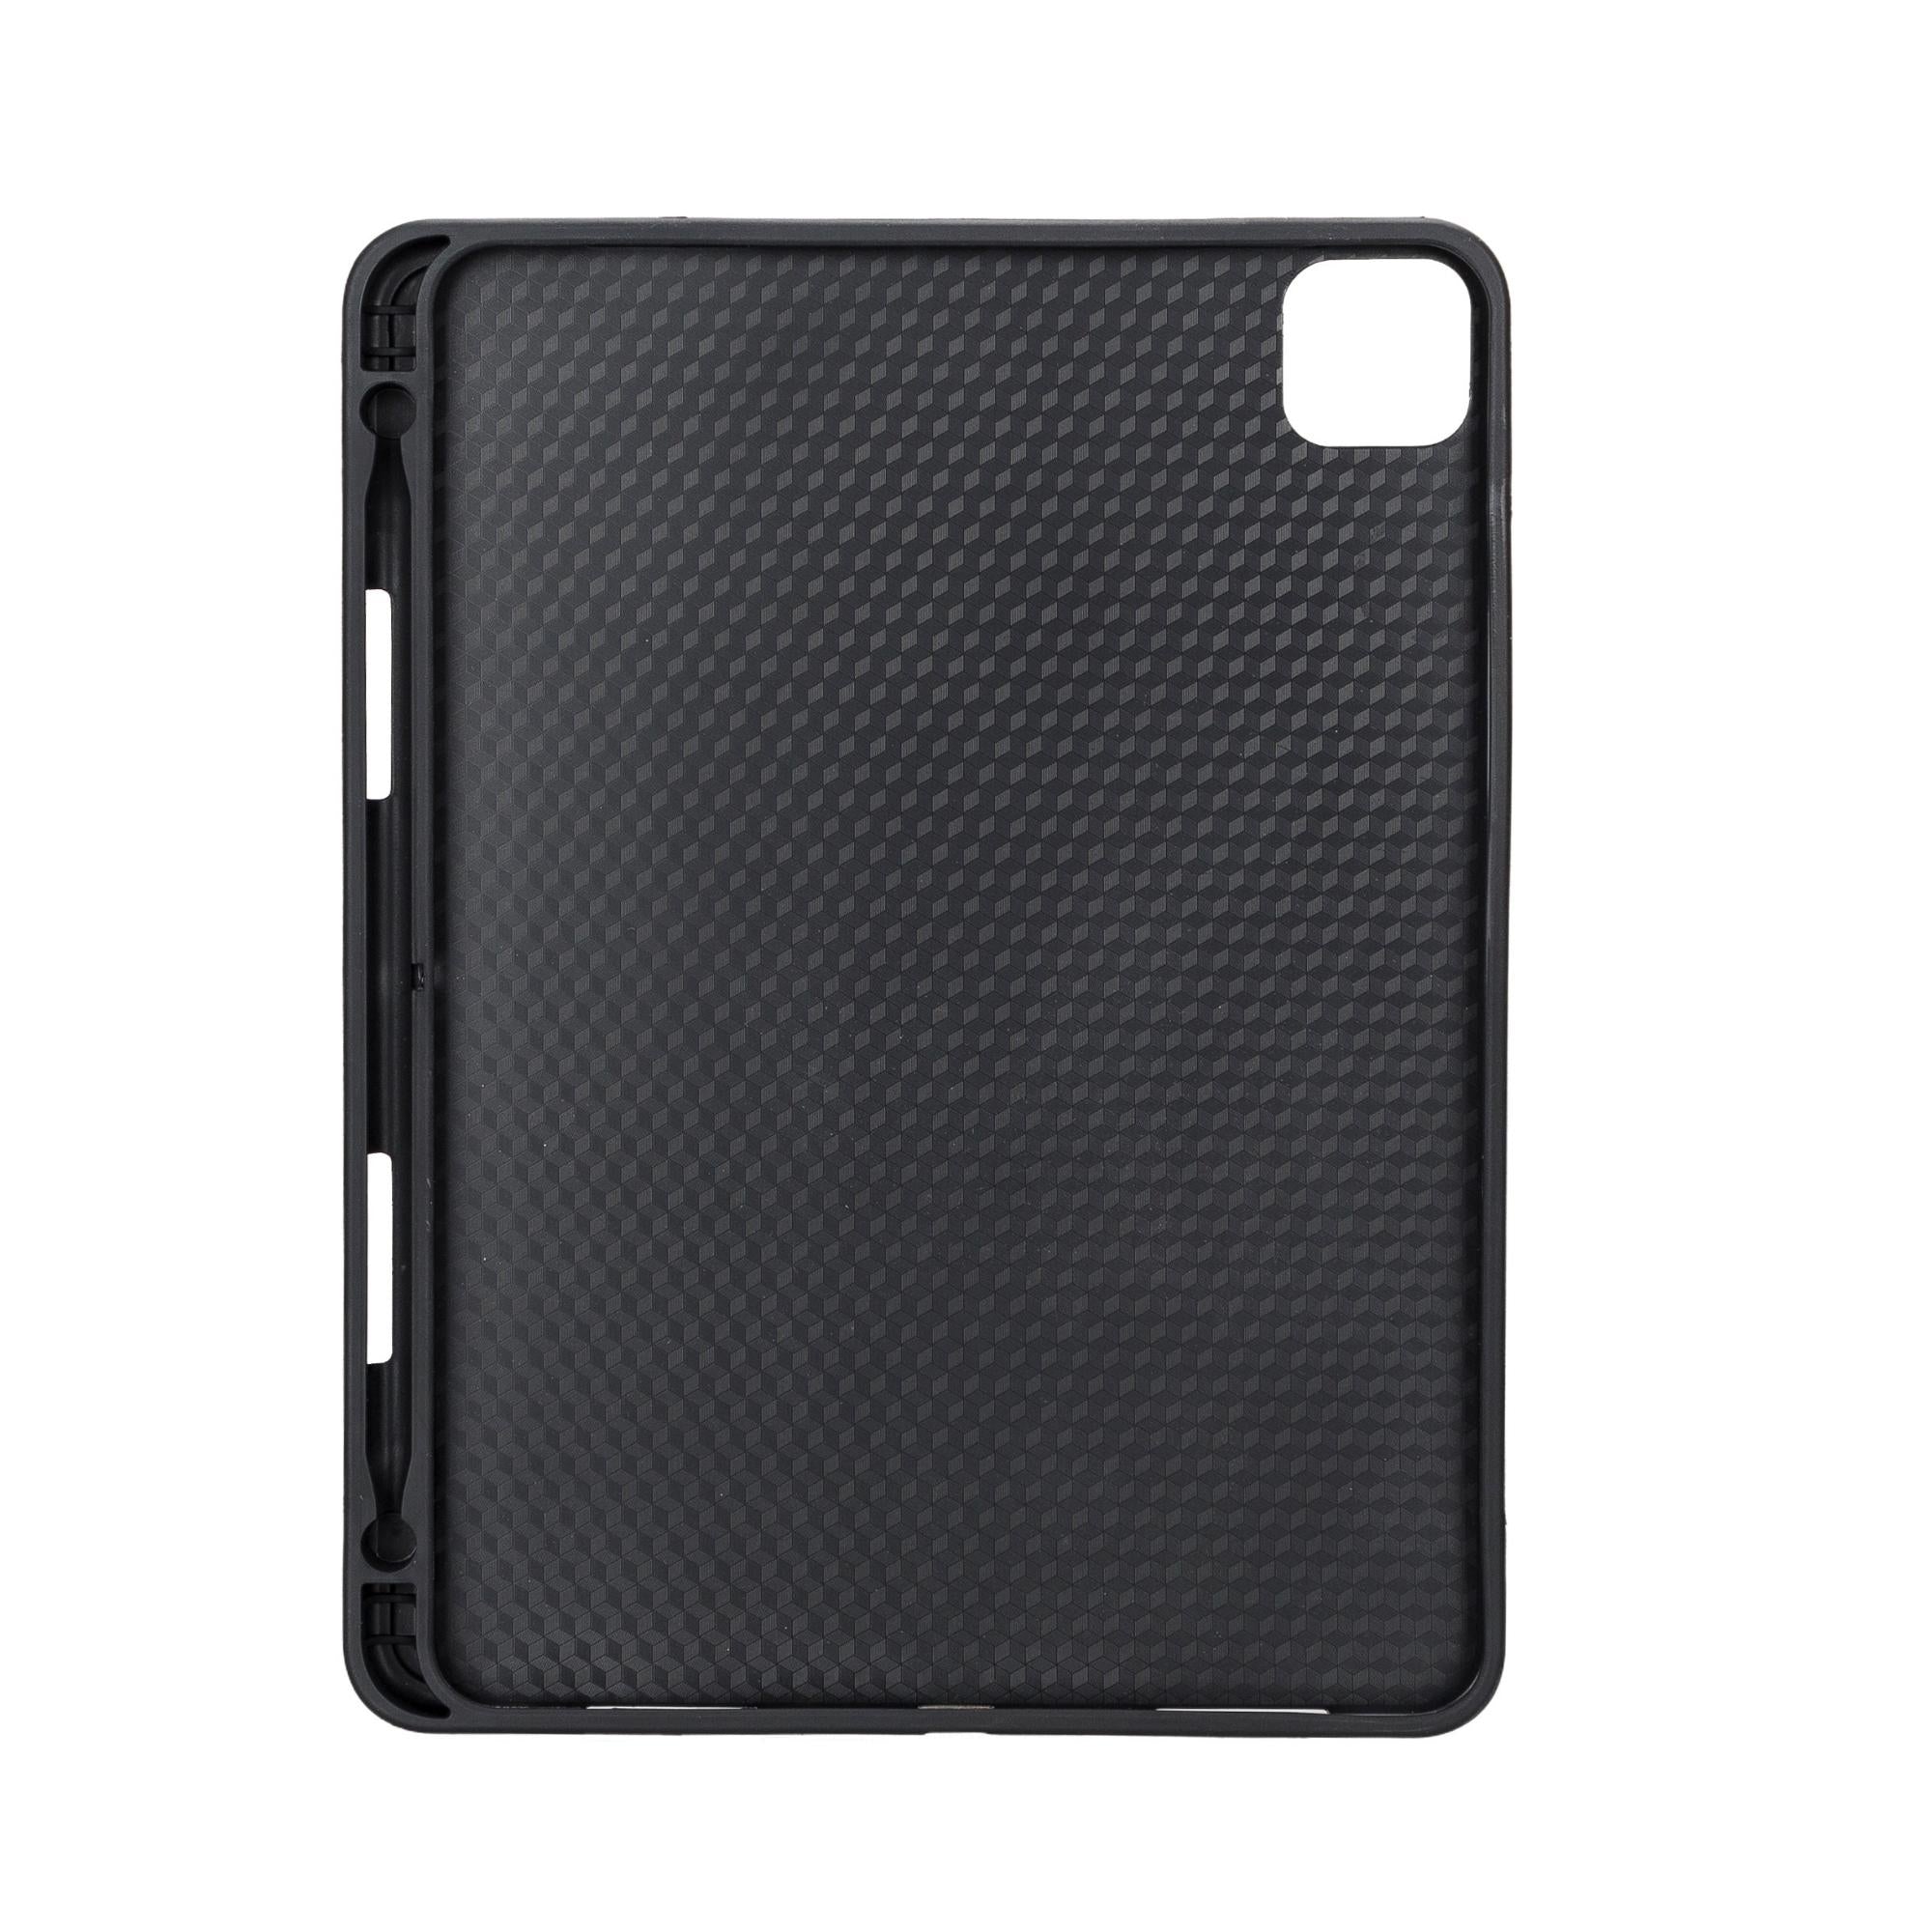 Albany Leather Wallet Case for iPad Pro 11-inch - Tan - 5th Generation-2021 - TORONATA